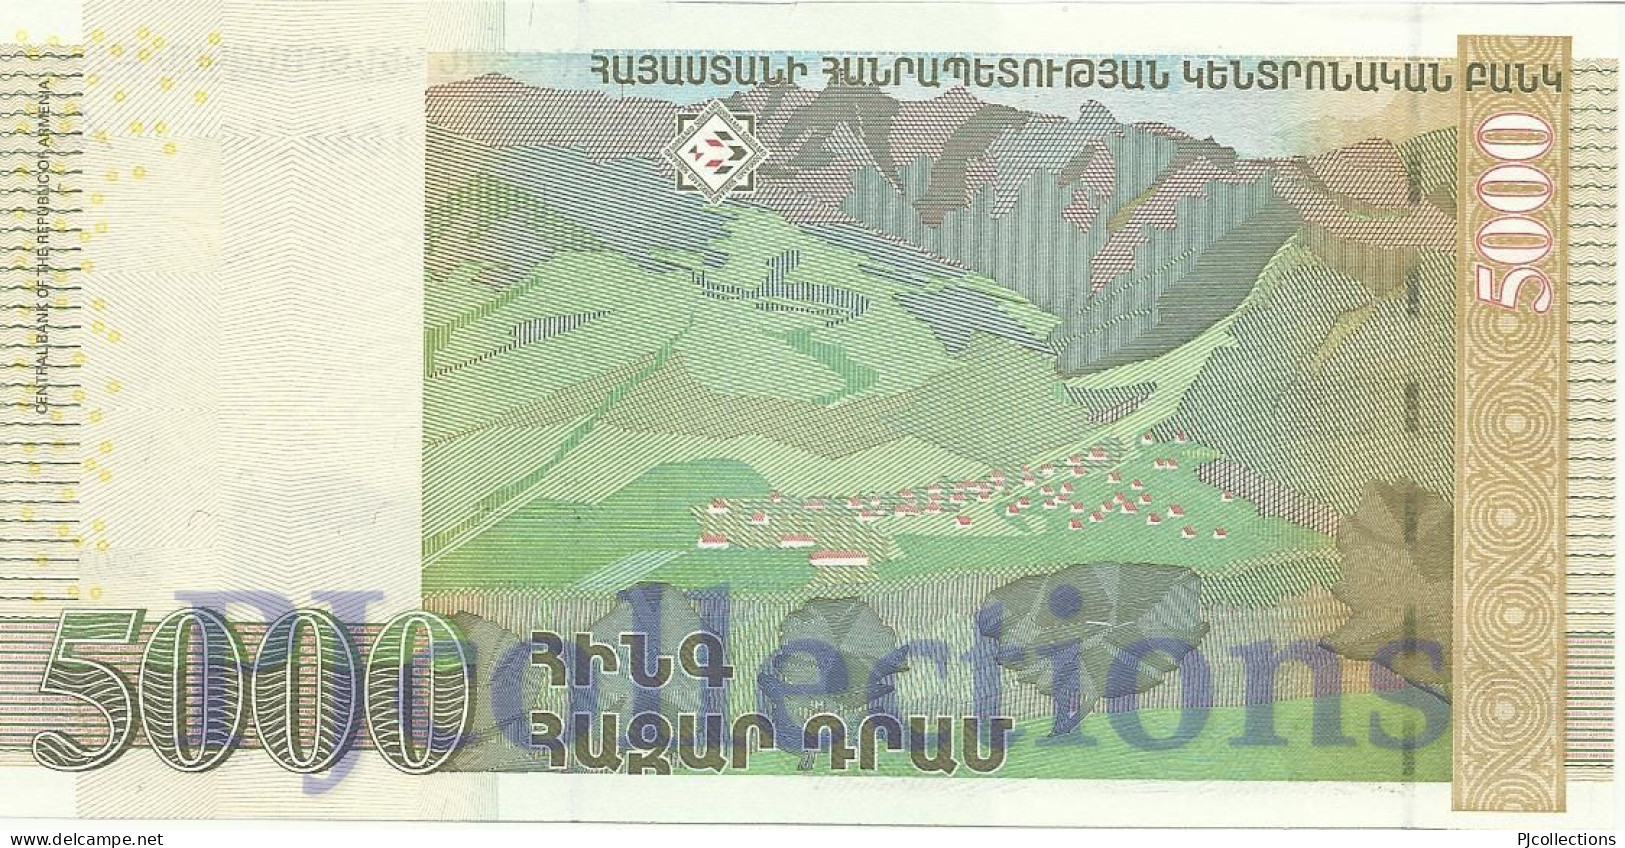 ARMENIA 5000 DRAM 2003 PICK 51 UNC - Armenia